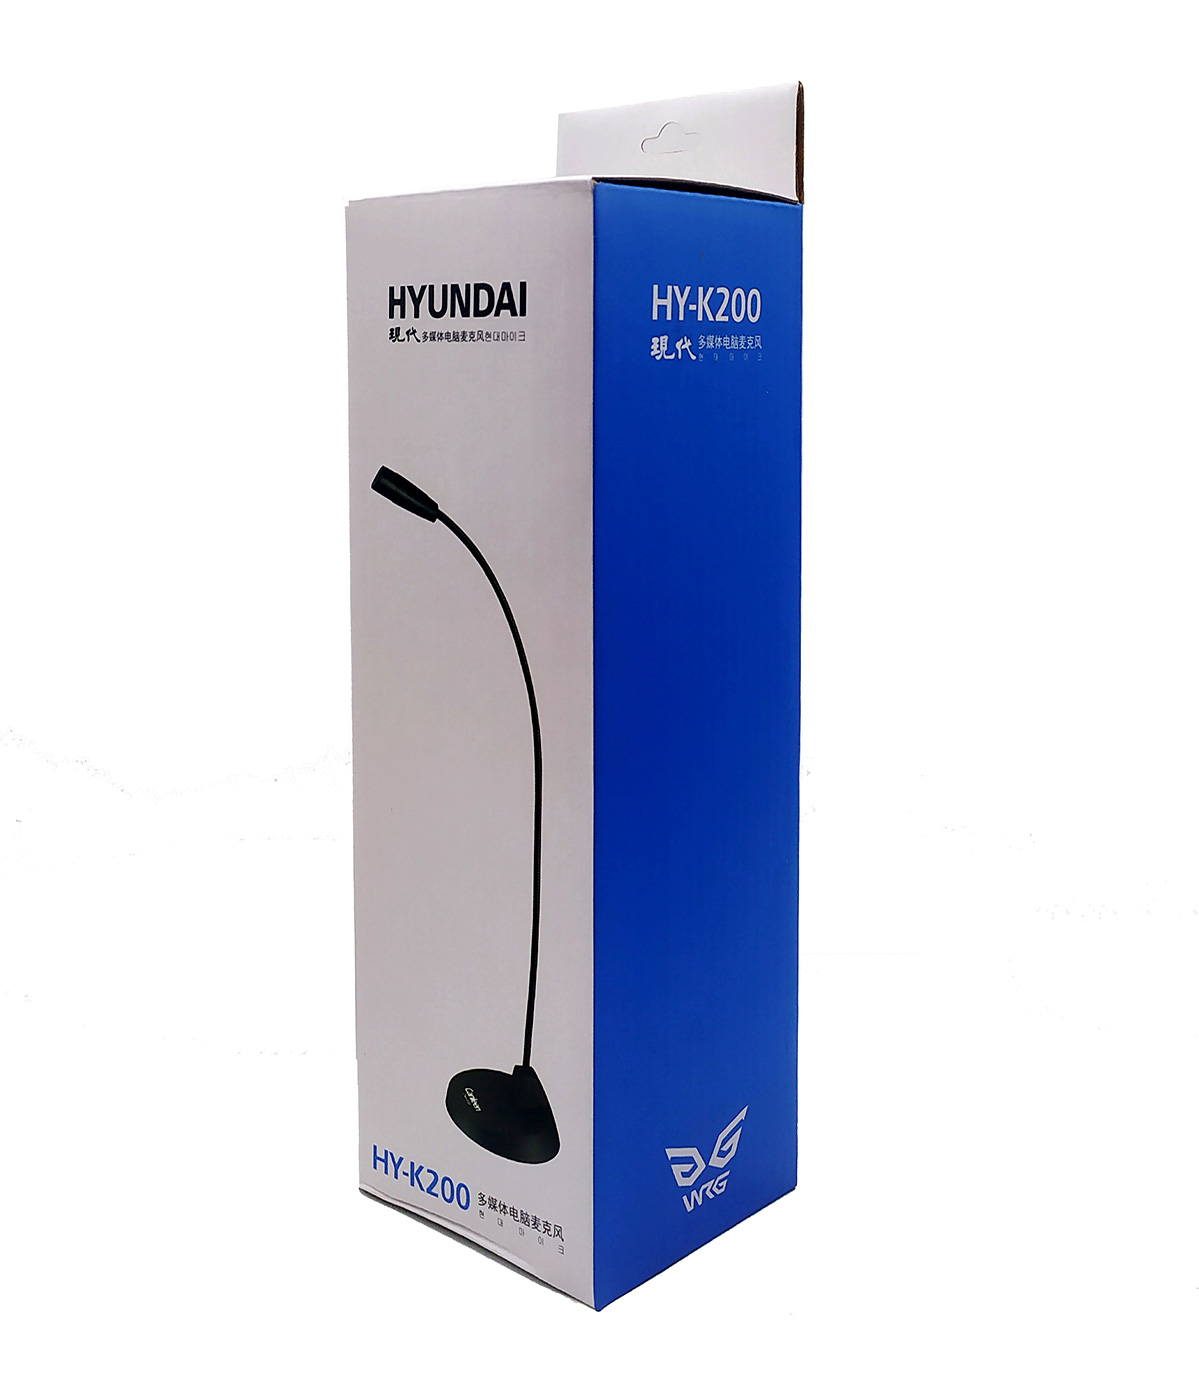 microphone Hyundai hy k200 (1)